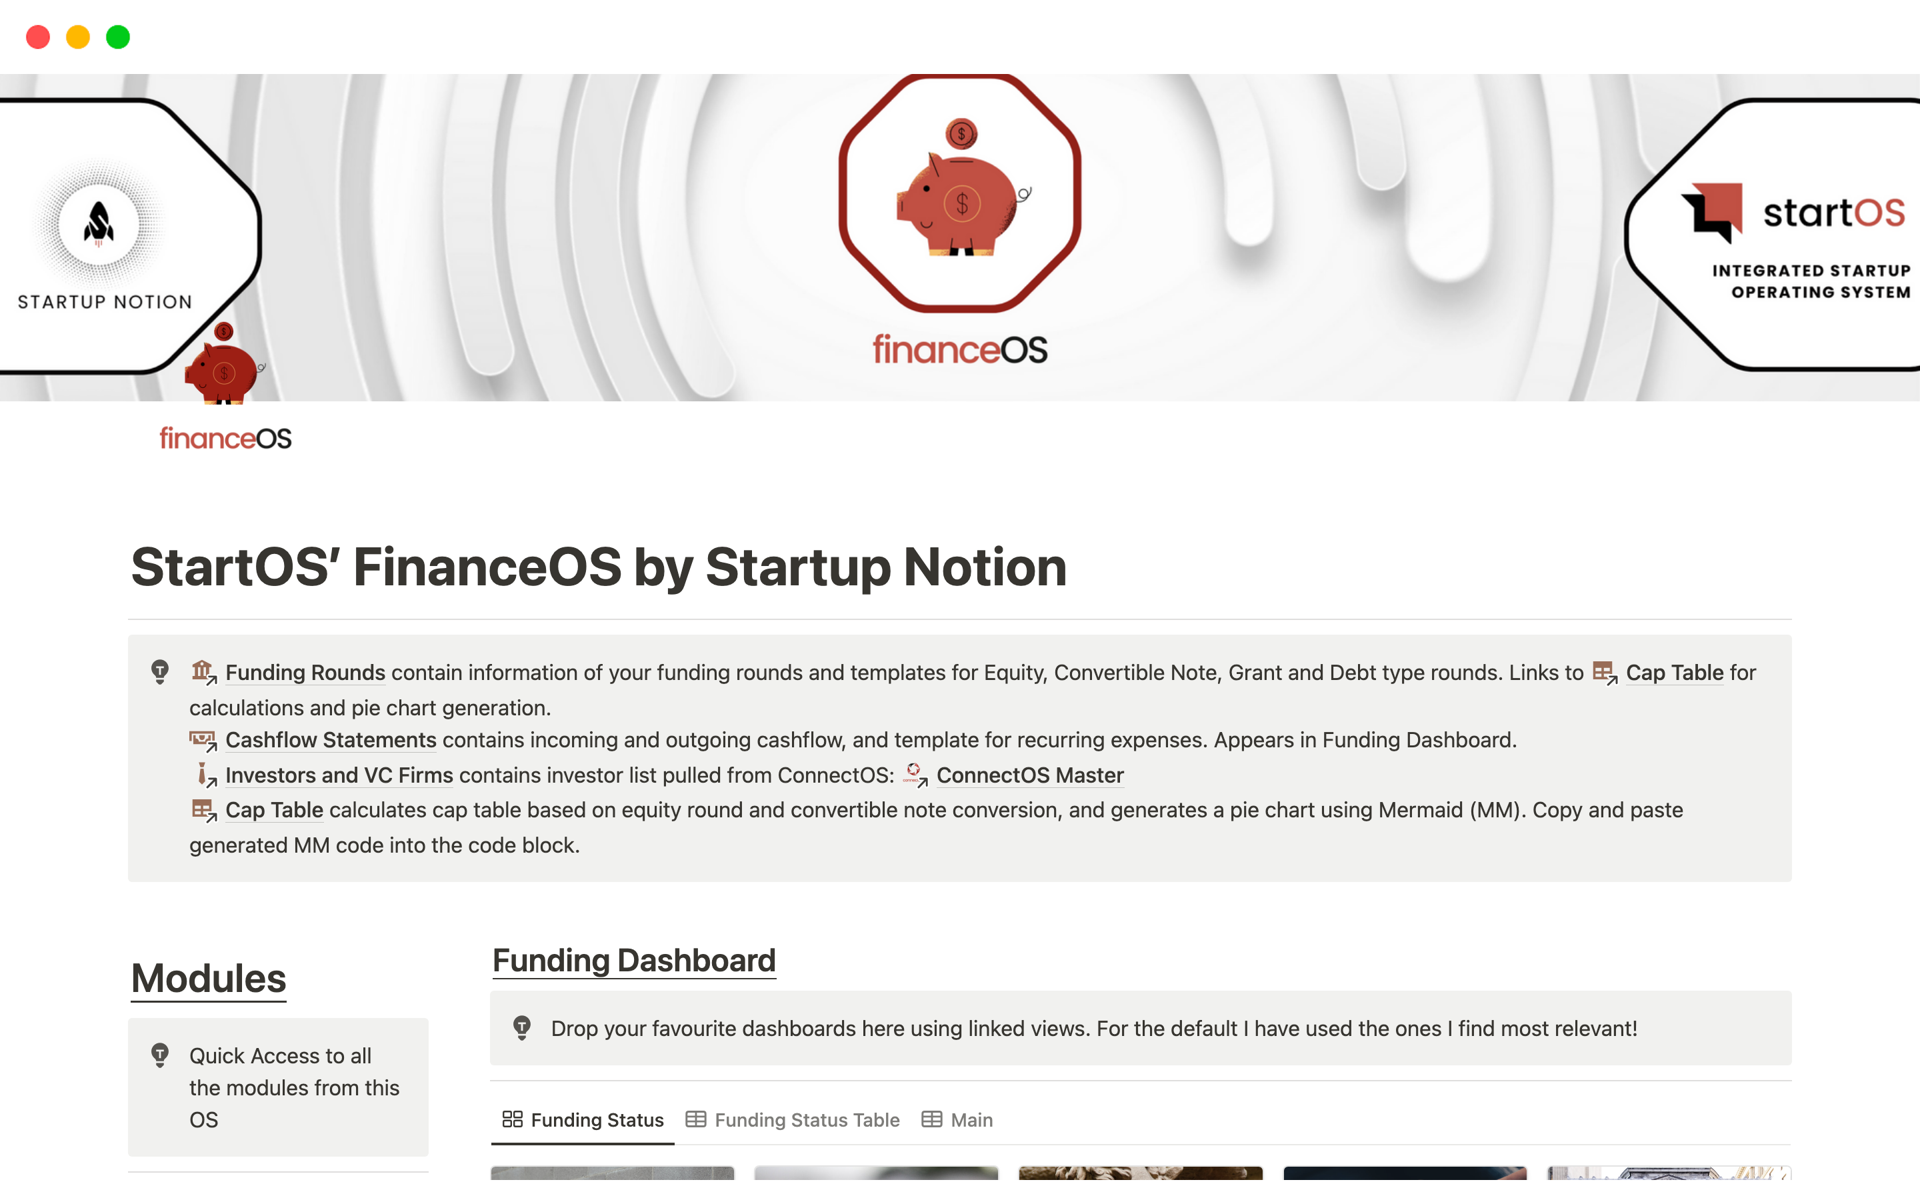 Aperçu du modèle de StartOS’ FinanceOS by Startup Notion